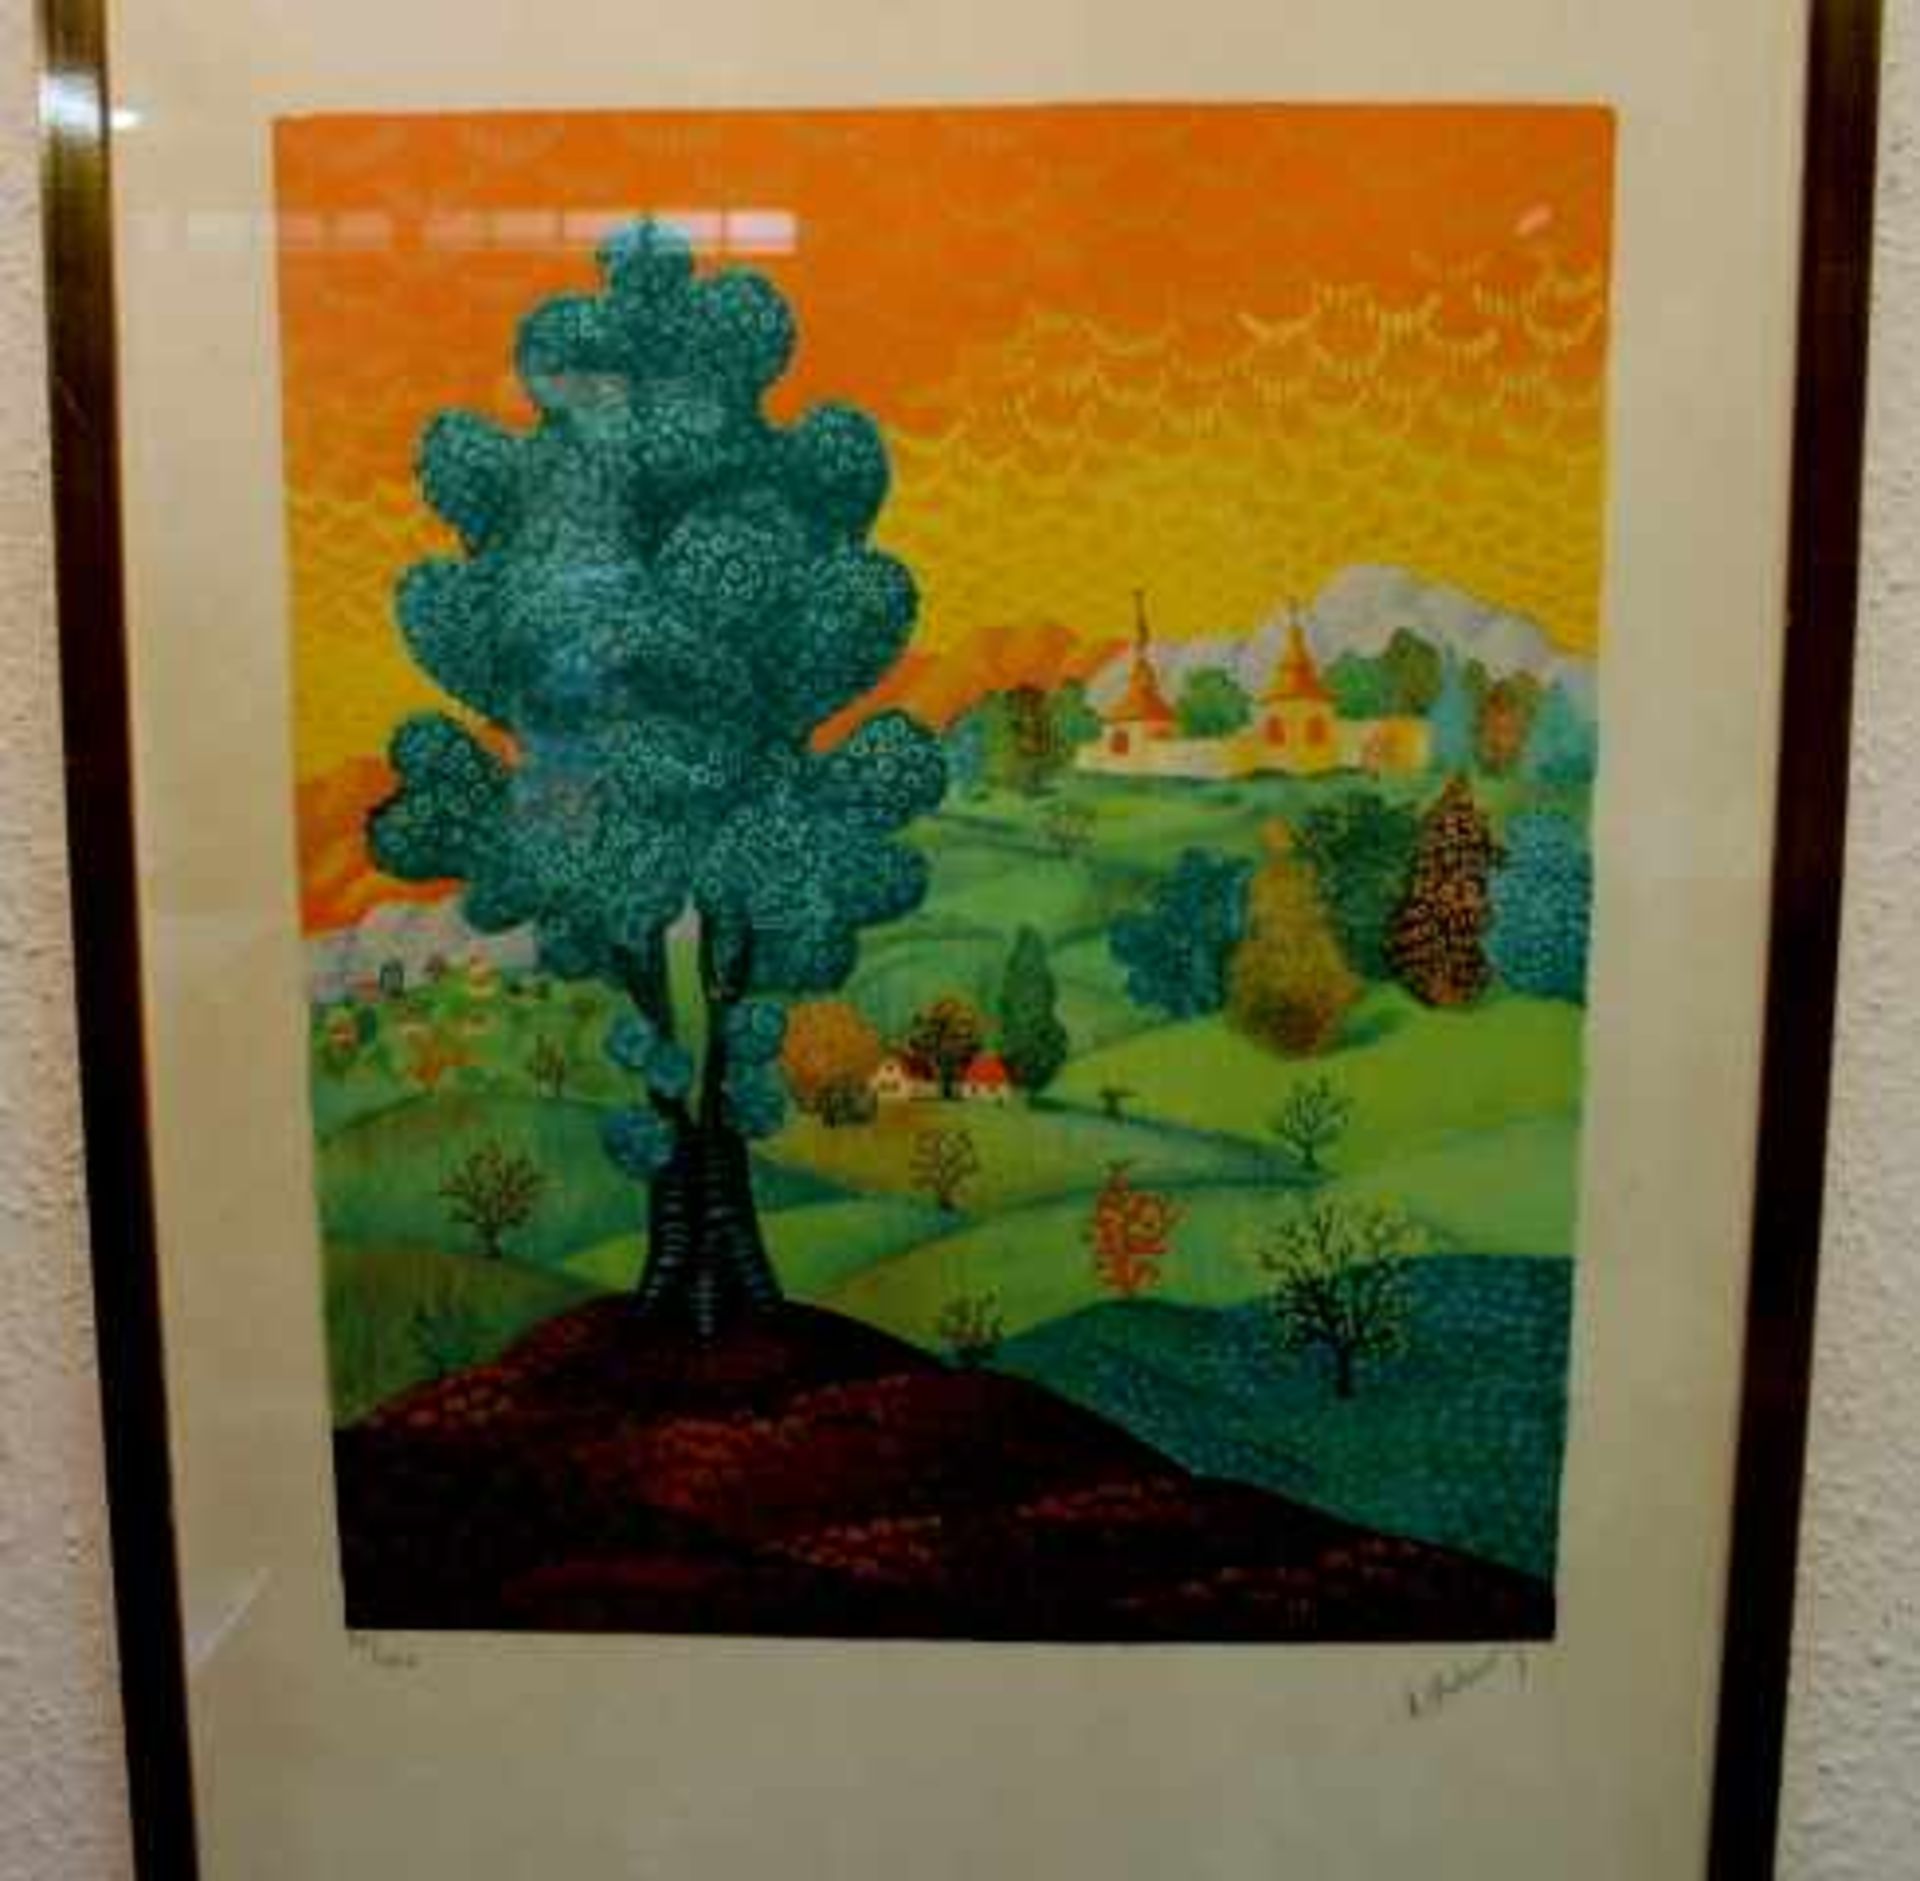 Bahunek Antun 1912 Croatien » Landschaft mit Baum « Farblithographie 32/100 53 x 43cm gerahmt